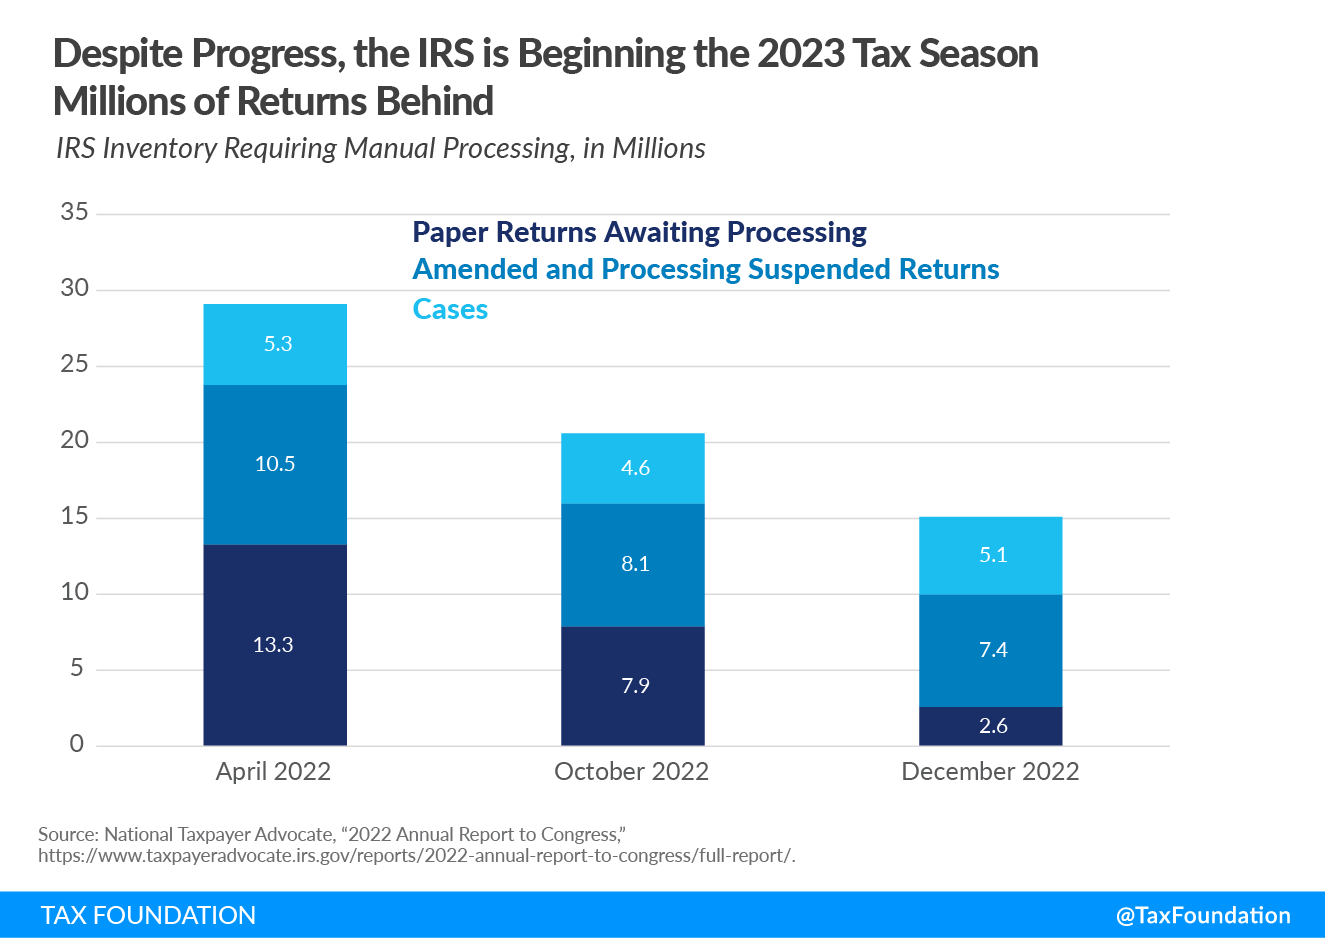 Despite progress, the IRS is beginning the 2023 tax season millions of returns behind 2023 tax filing season analysis